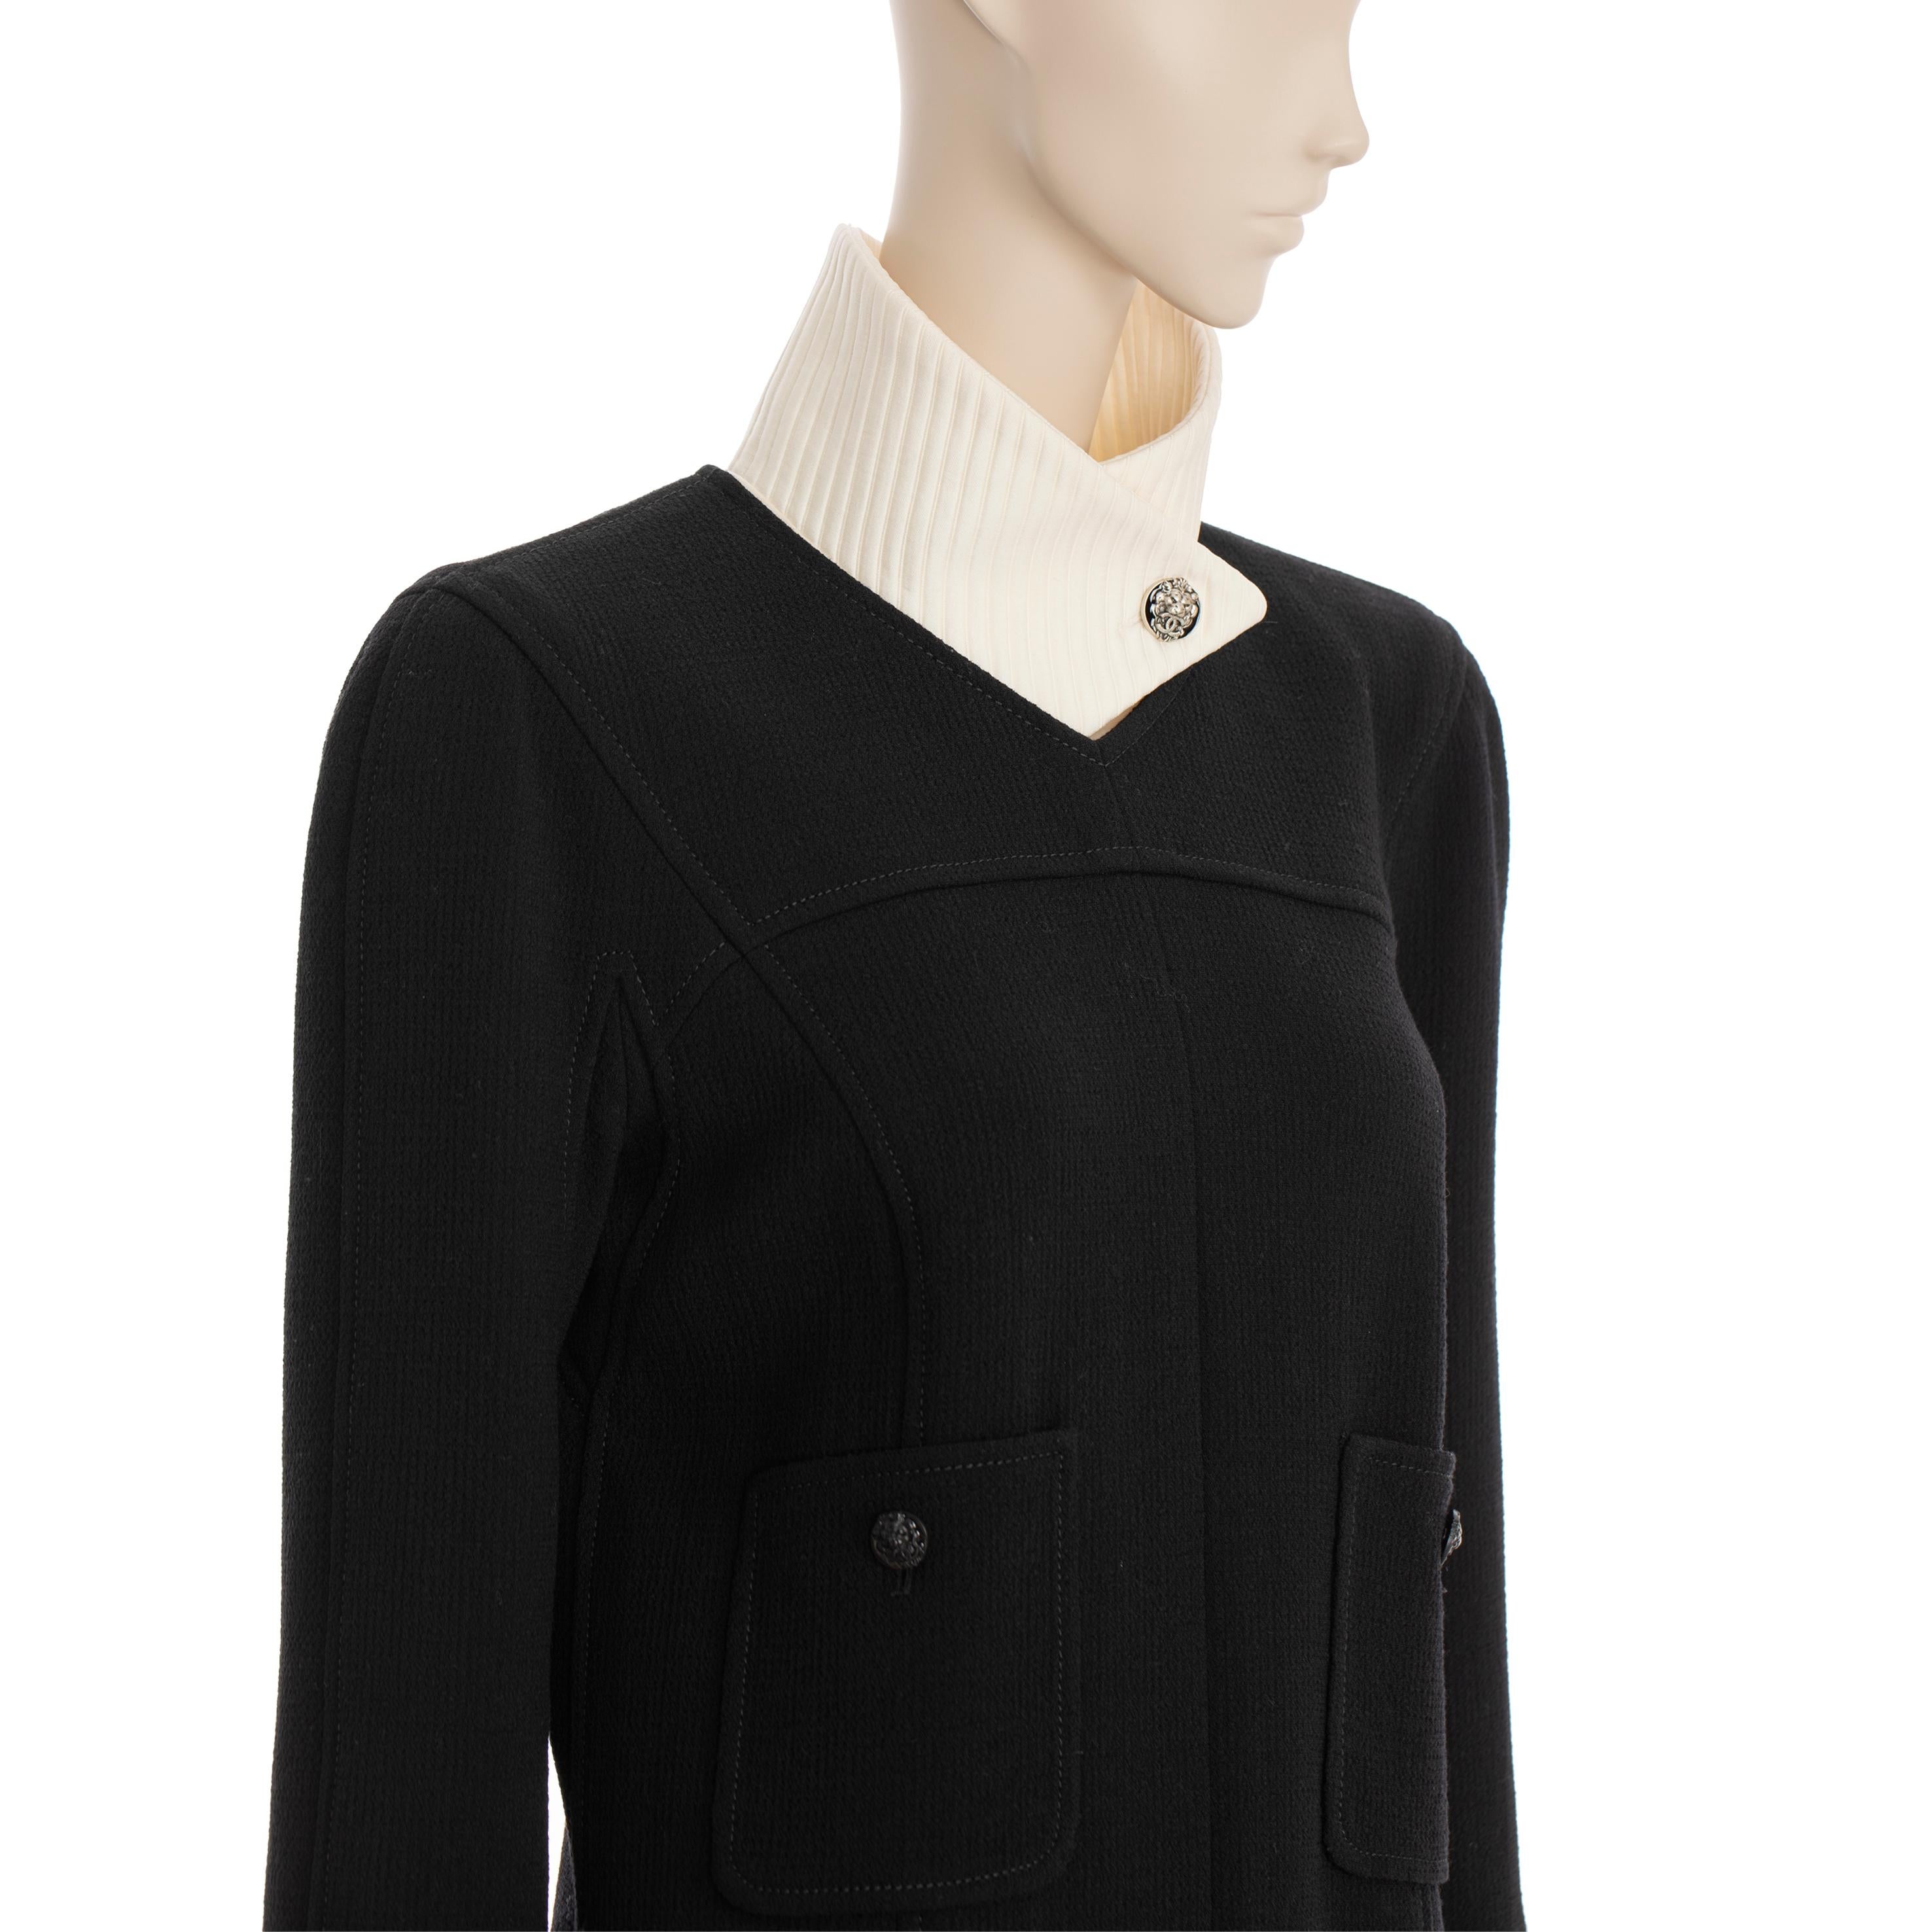 Chanel Long Black Dress With Detachable Collar & Cuff 40 FR 6